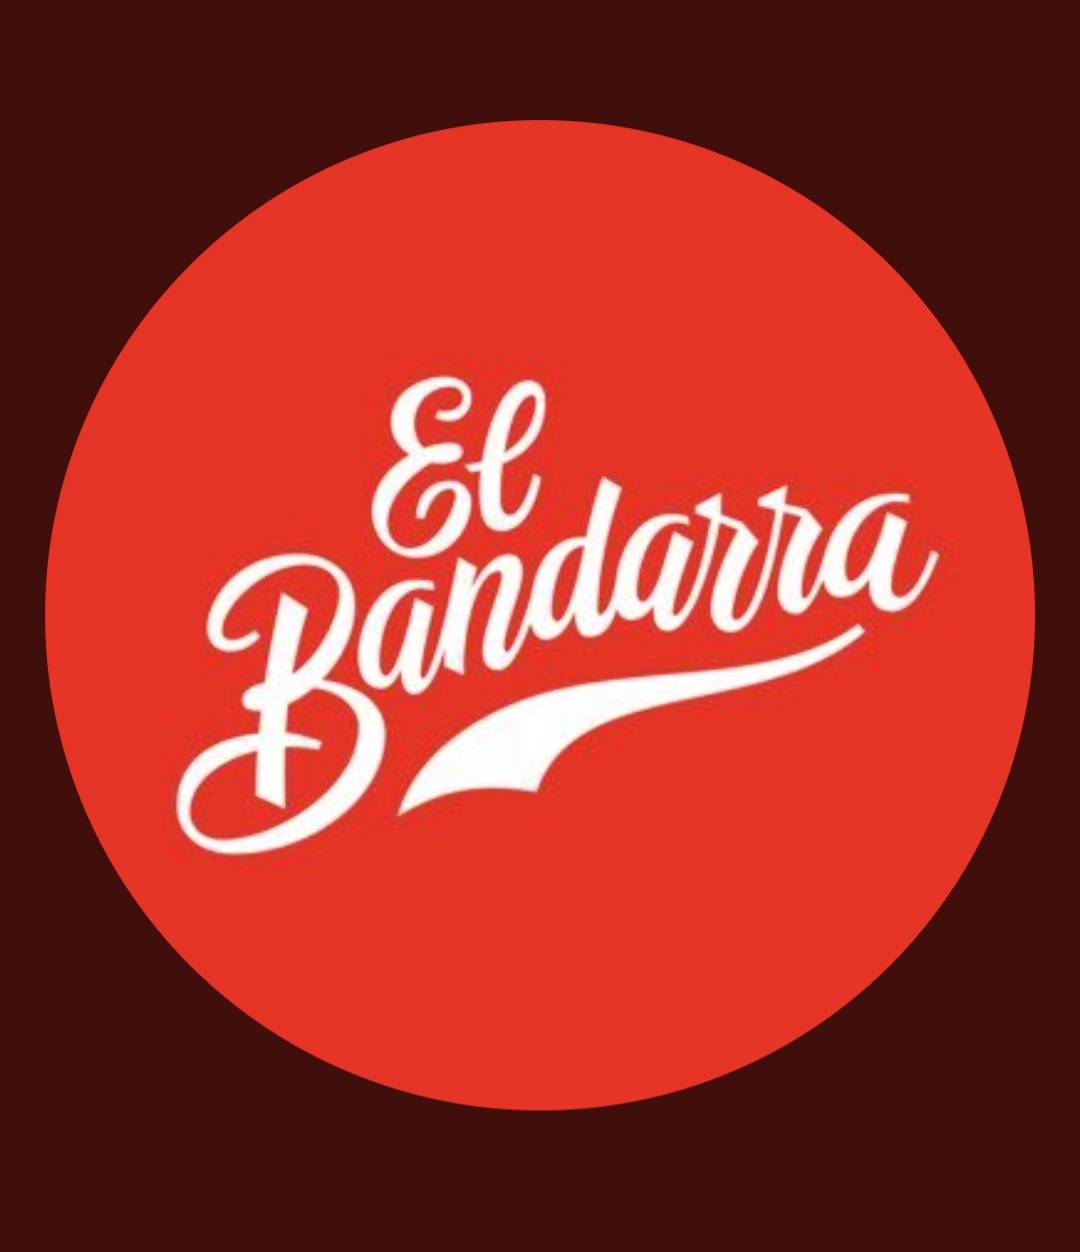  EL BANDARRA (MADRID)